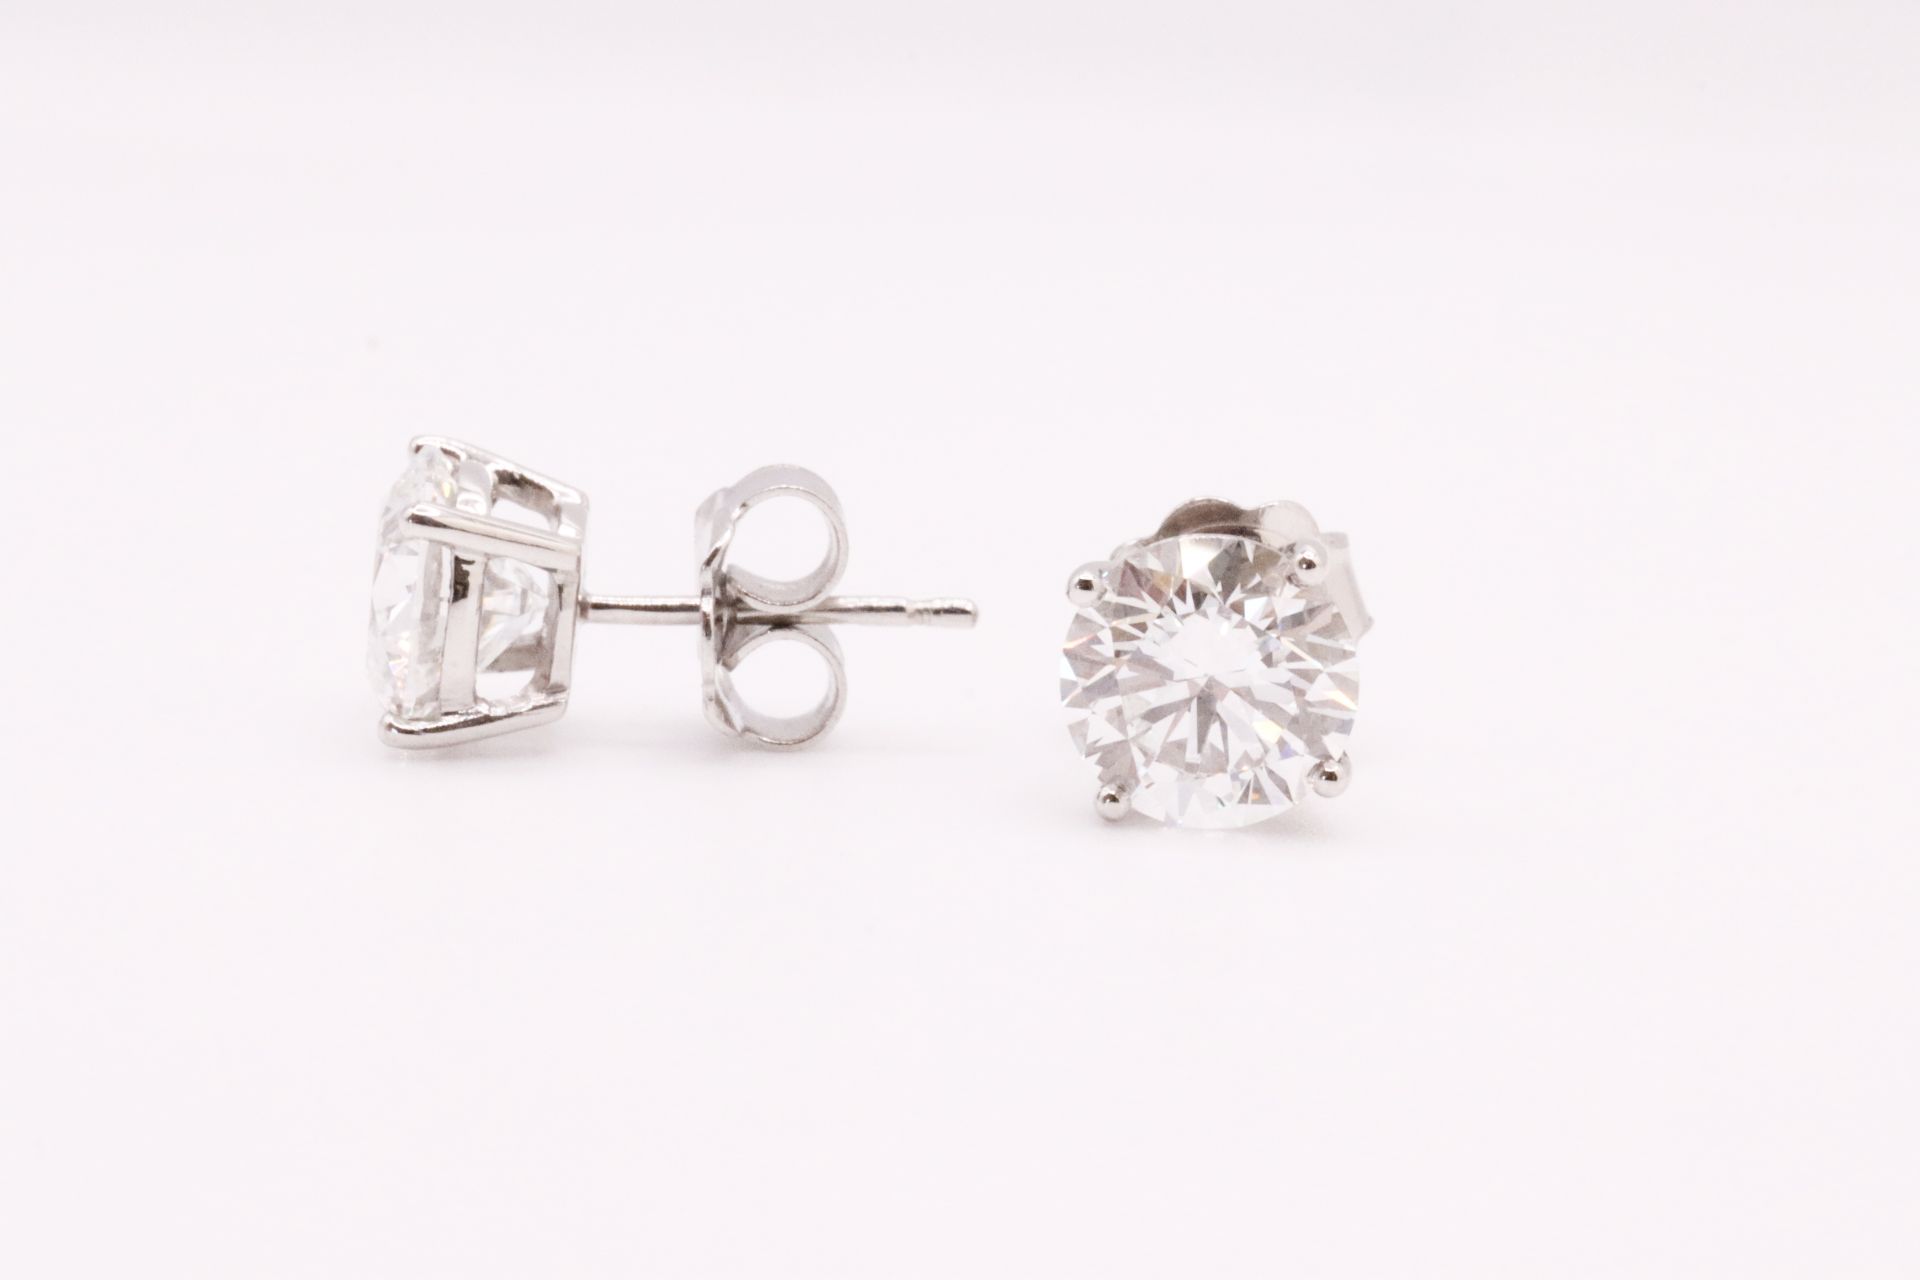 Round Brilliant Cut 4.00 Carat Diamond Earrings Set in 18kt White Gold - D Colour VS Clarity - IGI - Image 4 of 5